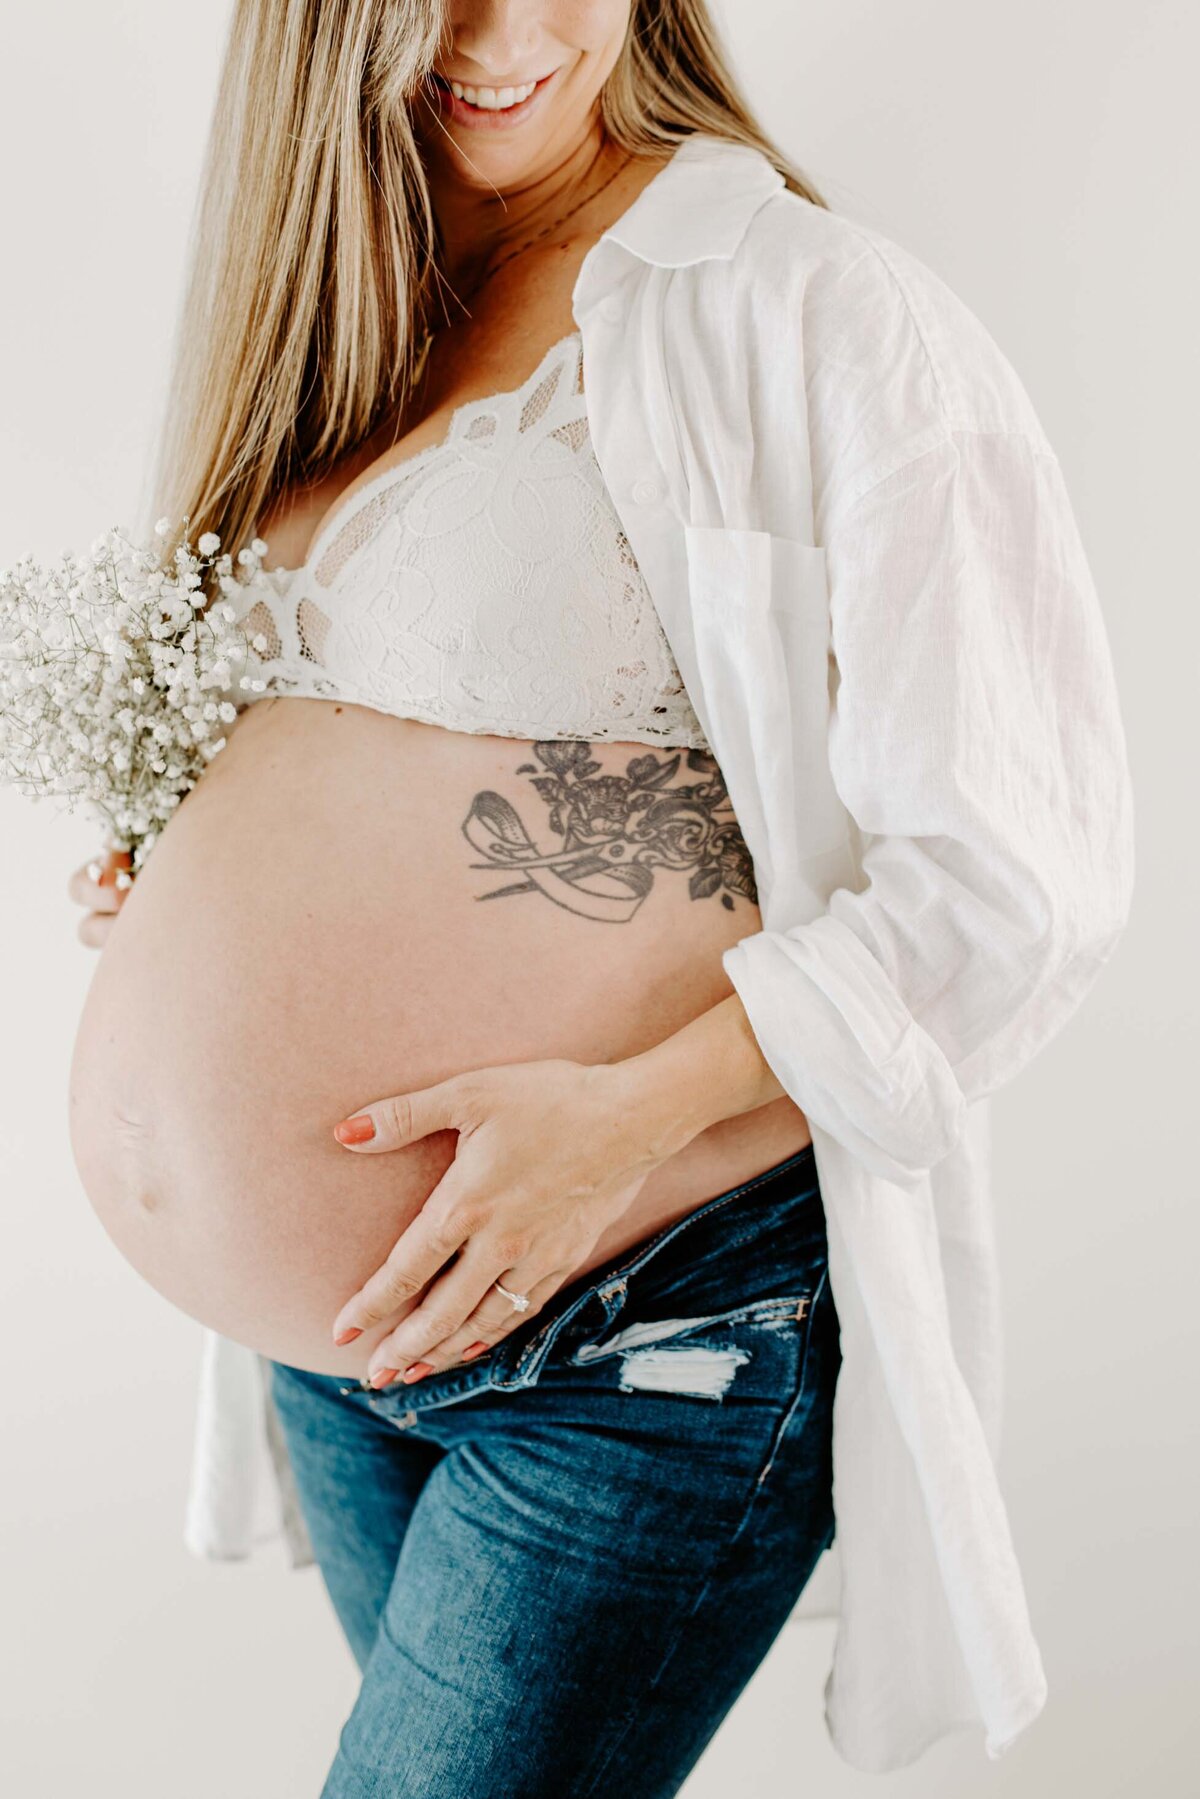 vancouver-studio-newborn-maternity-photography-session-marta-marta-photography-3